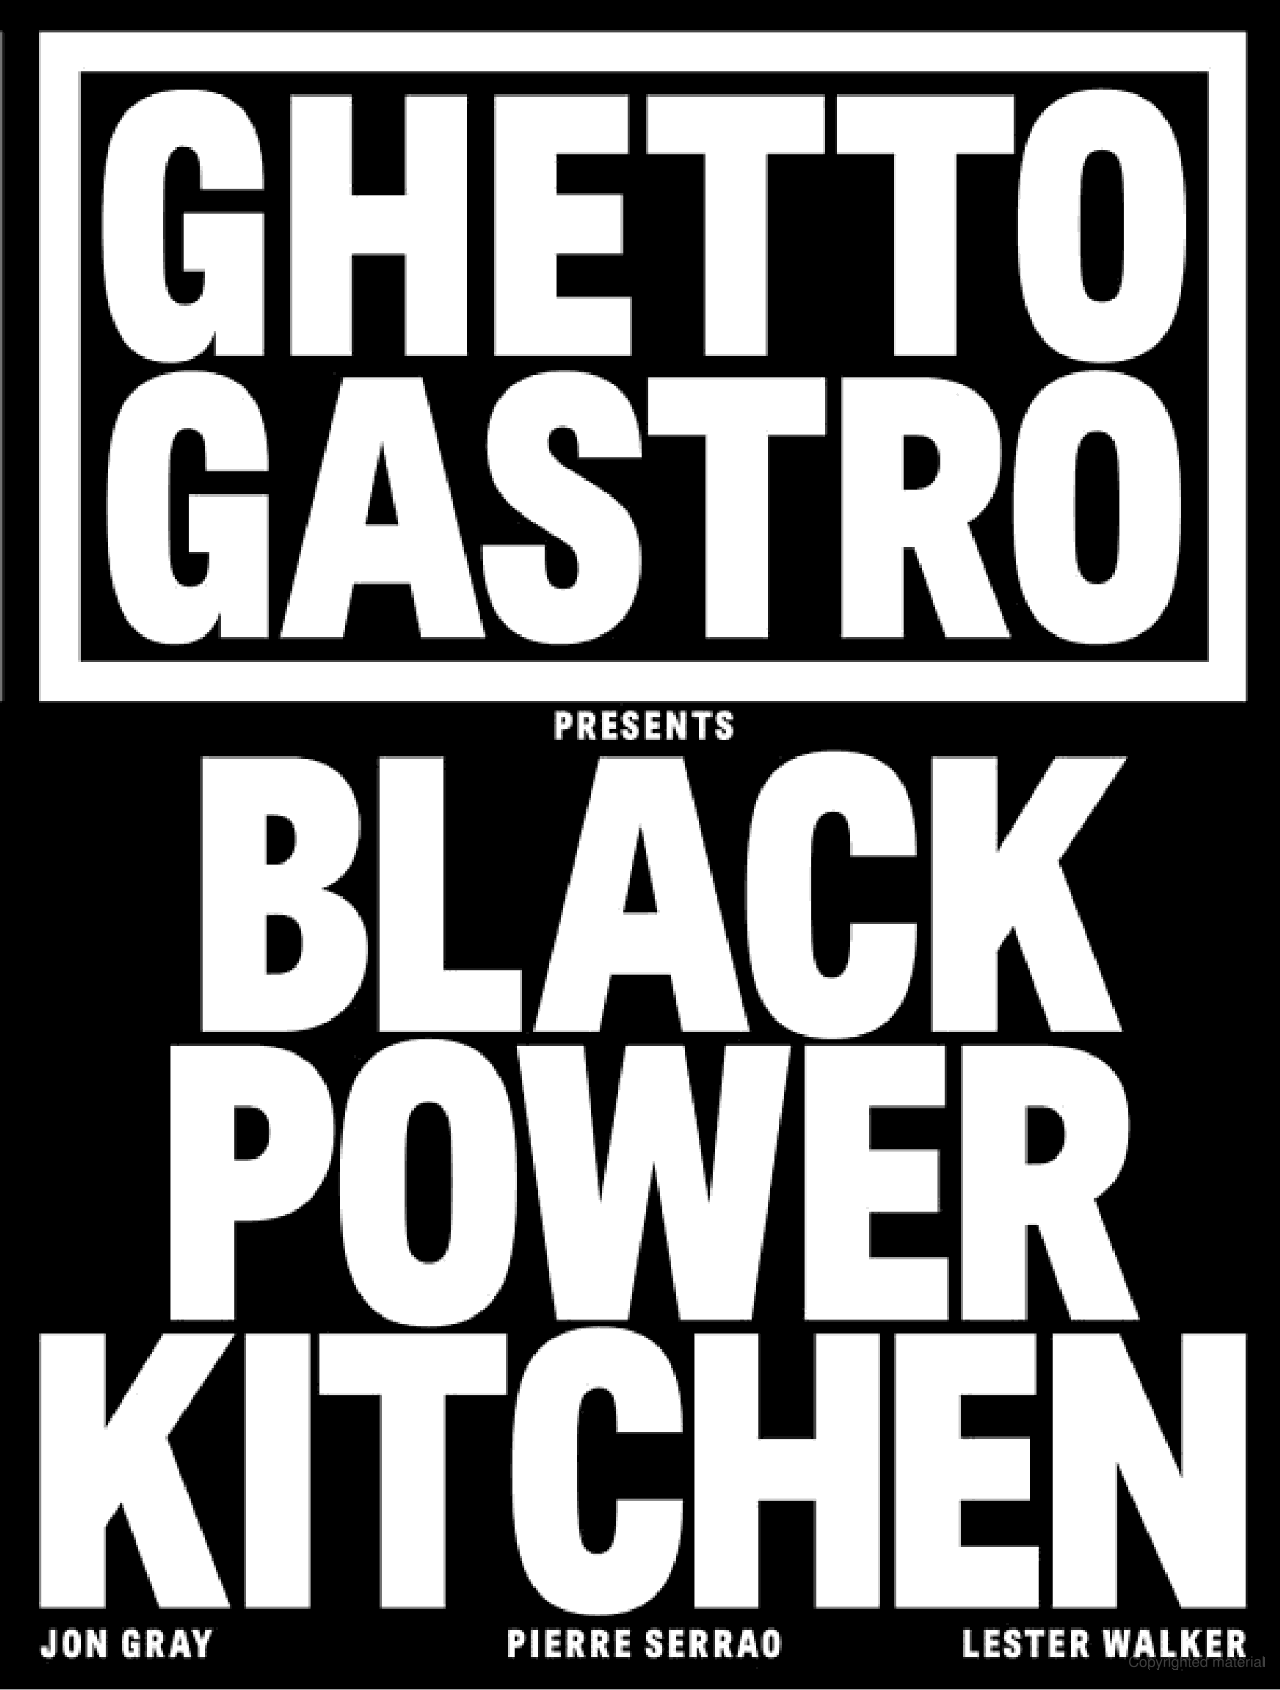 Ghetto Gastro Presents: Black Power Kitchen